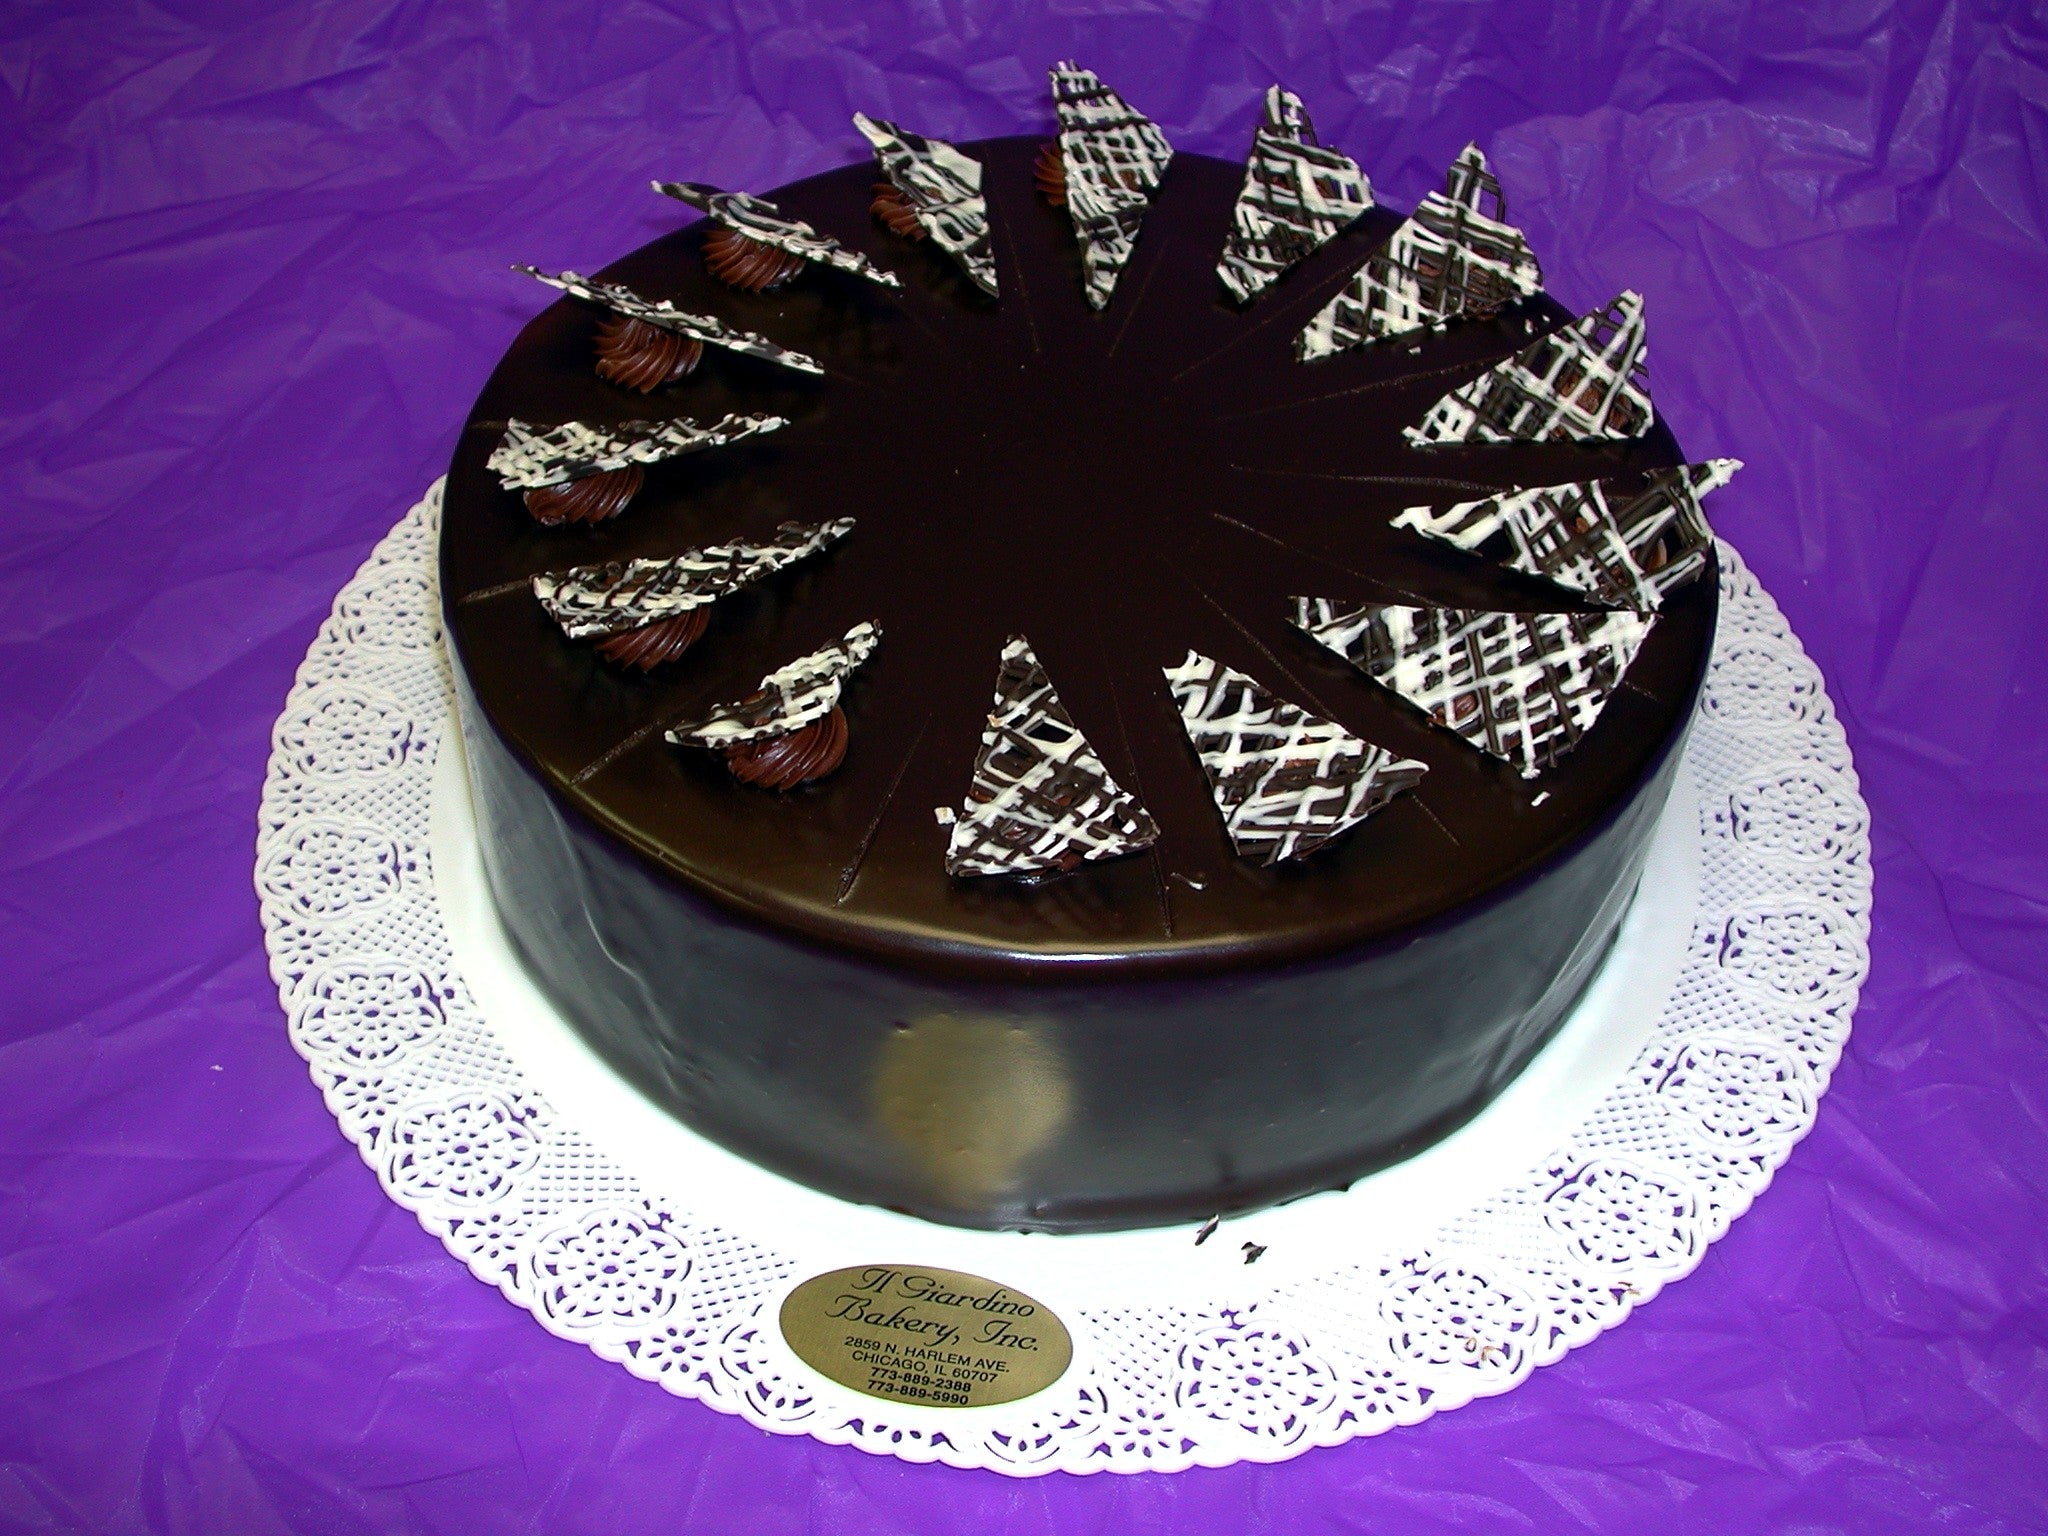 Double Chocolate Torte